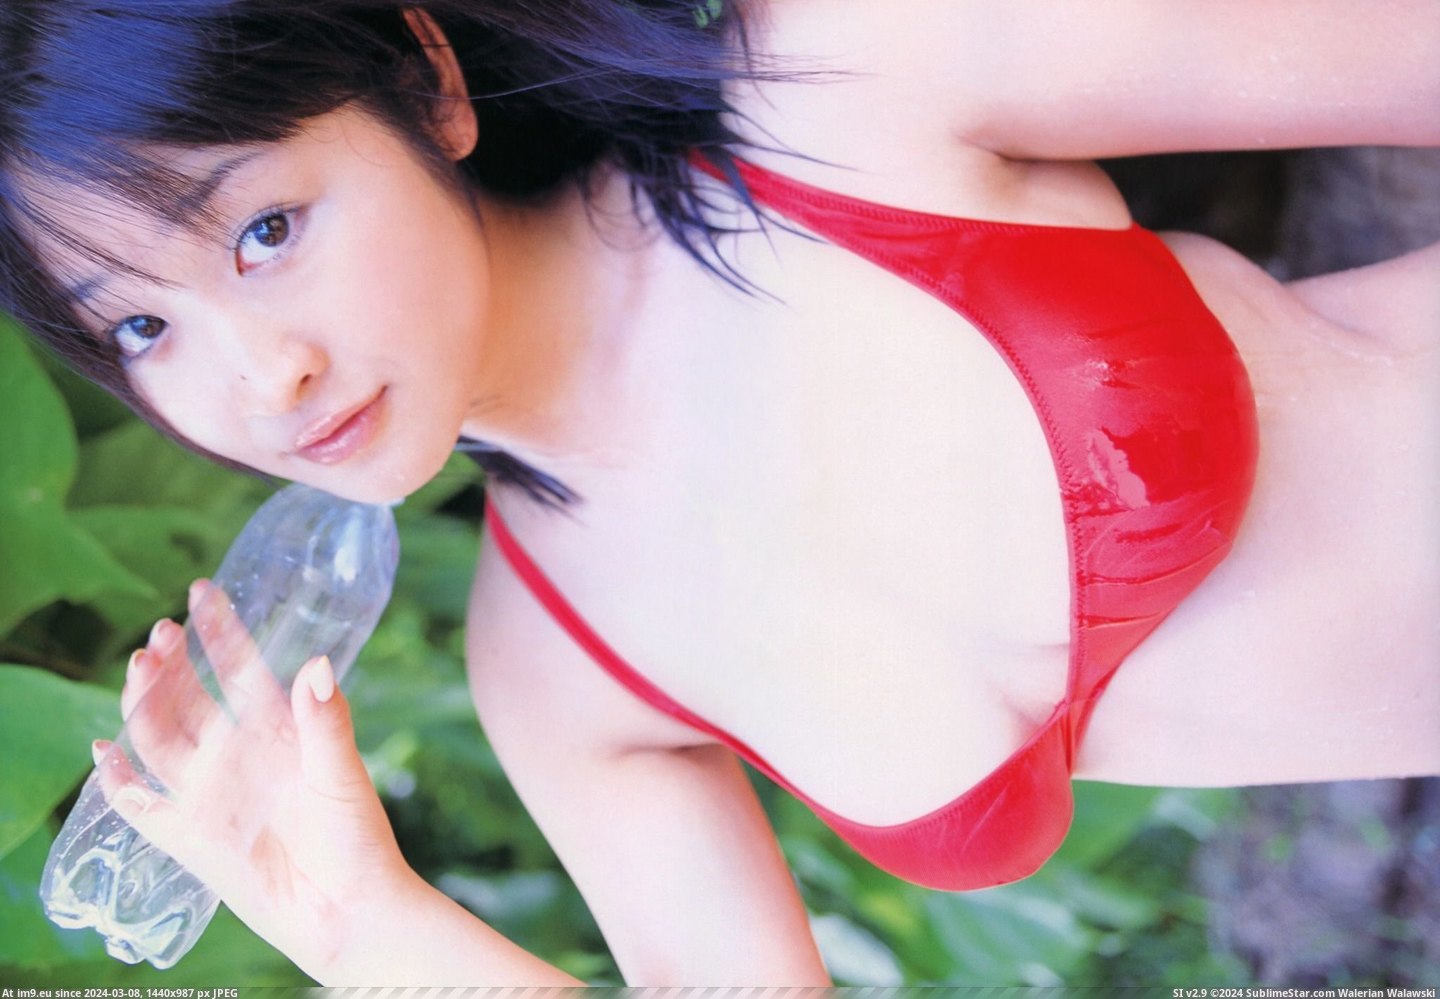 #Asian #Swimsuit #Shimamoto #Model #Risa Risa Shimamoto (2) (Asian Swimsuit Model) Pic. (Изображение из альбом Teen Asian Girls - Japanese Swimsuits Models))